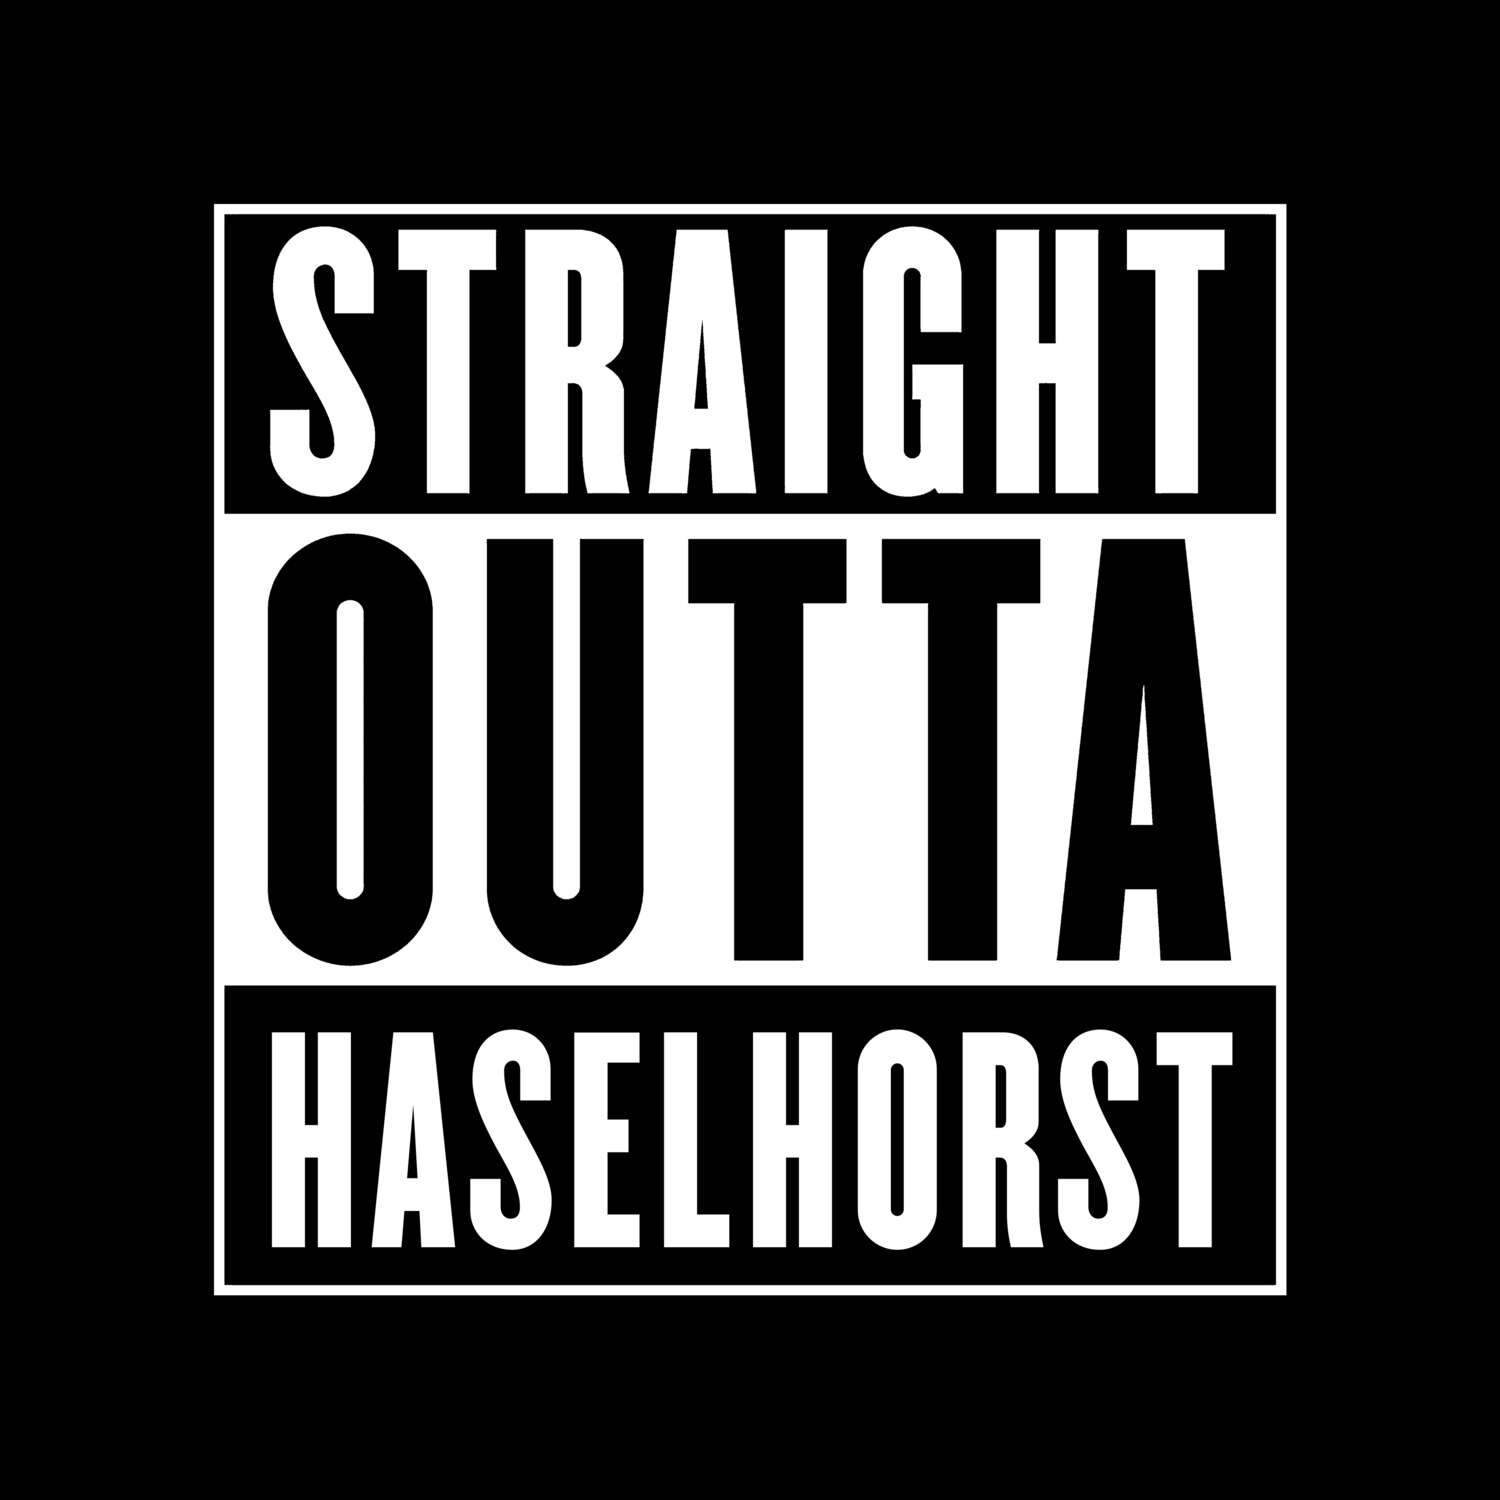 Haselhorst T-Shirt »Straight Outta«